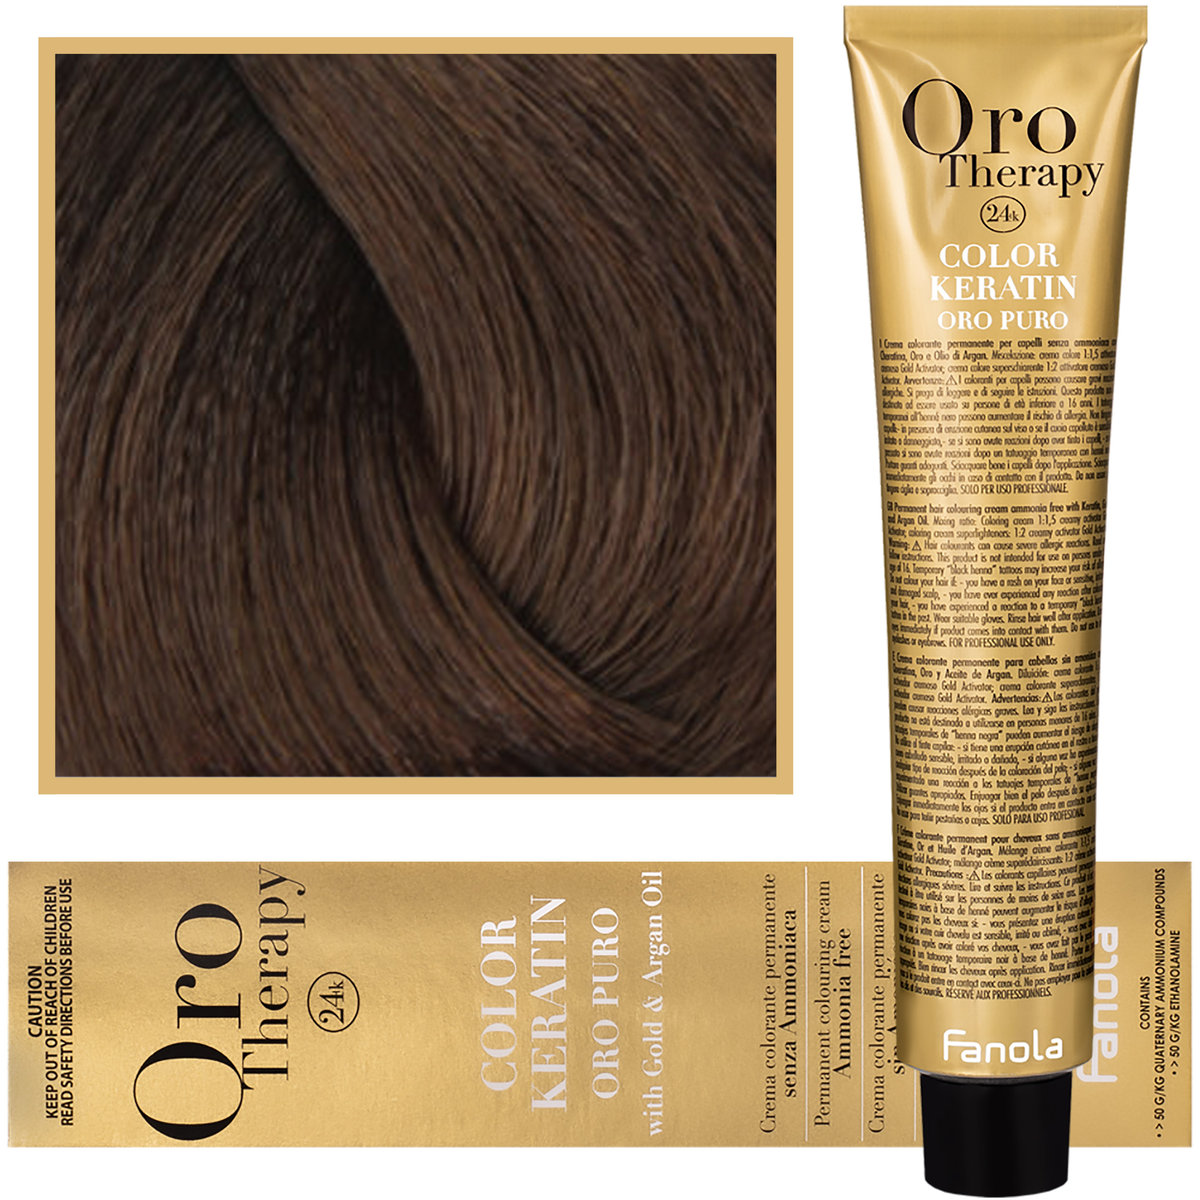 Fanola 6.0 Oro Puro Therapy Keratin Color 100 ML ciemny blond HC-18-05